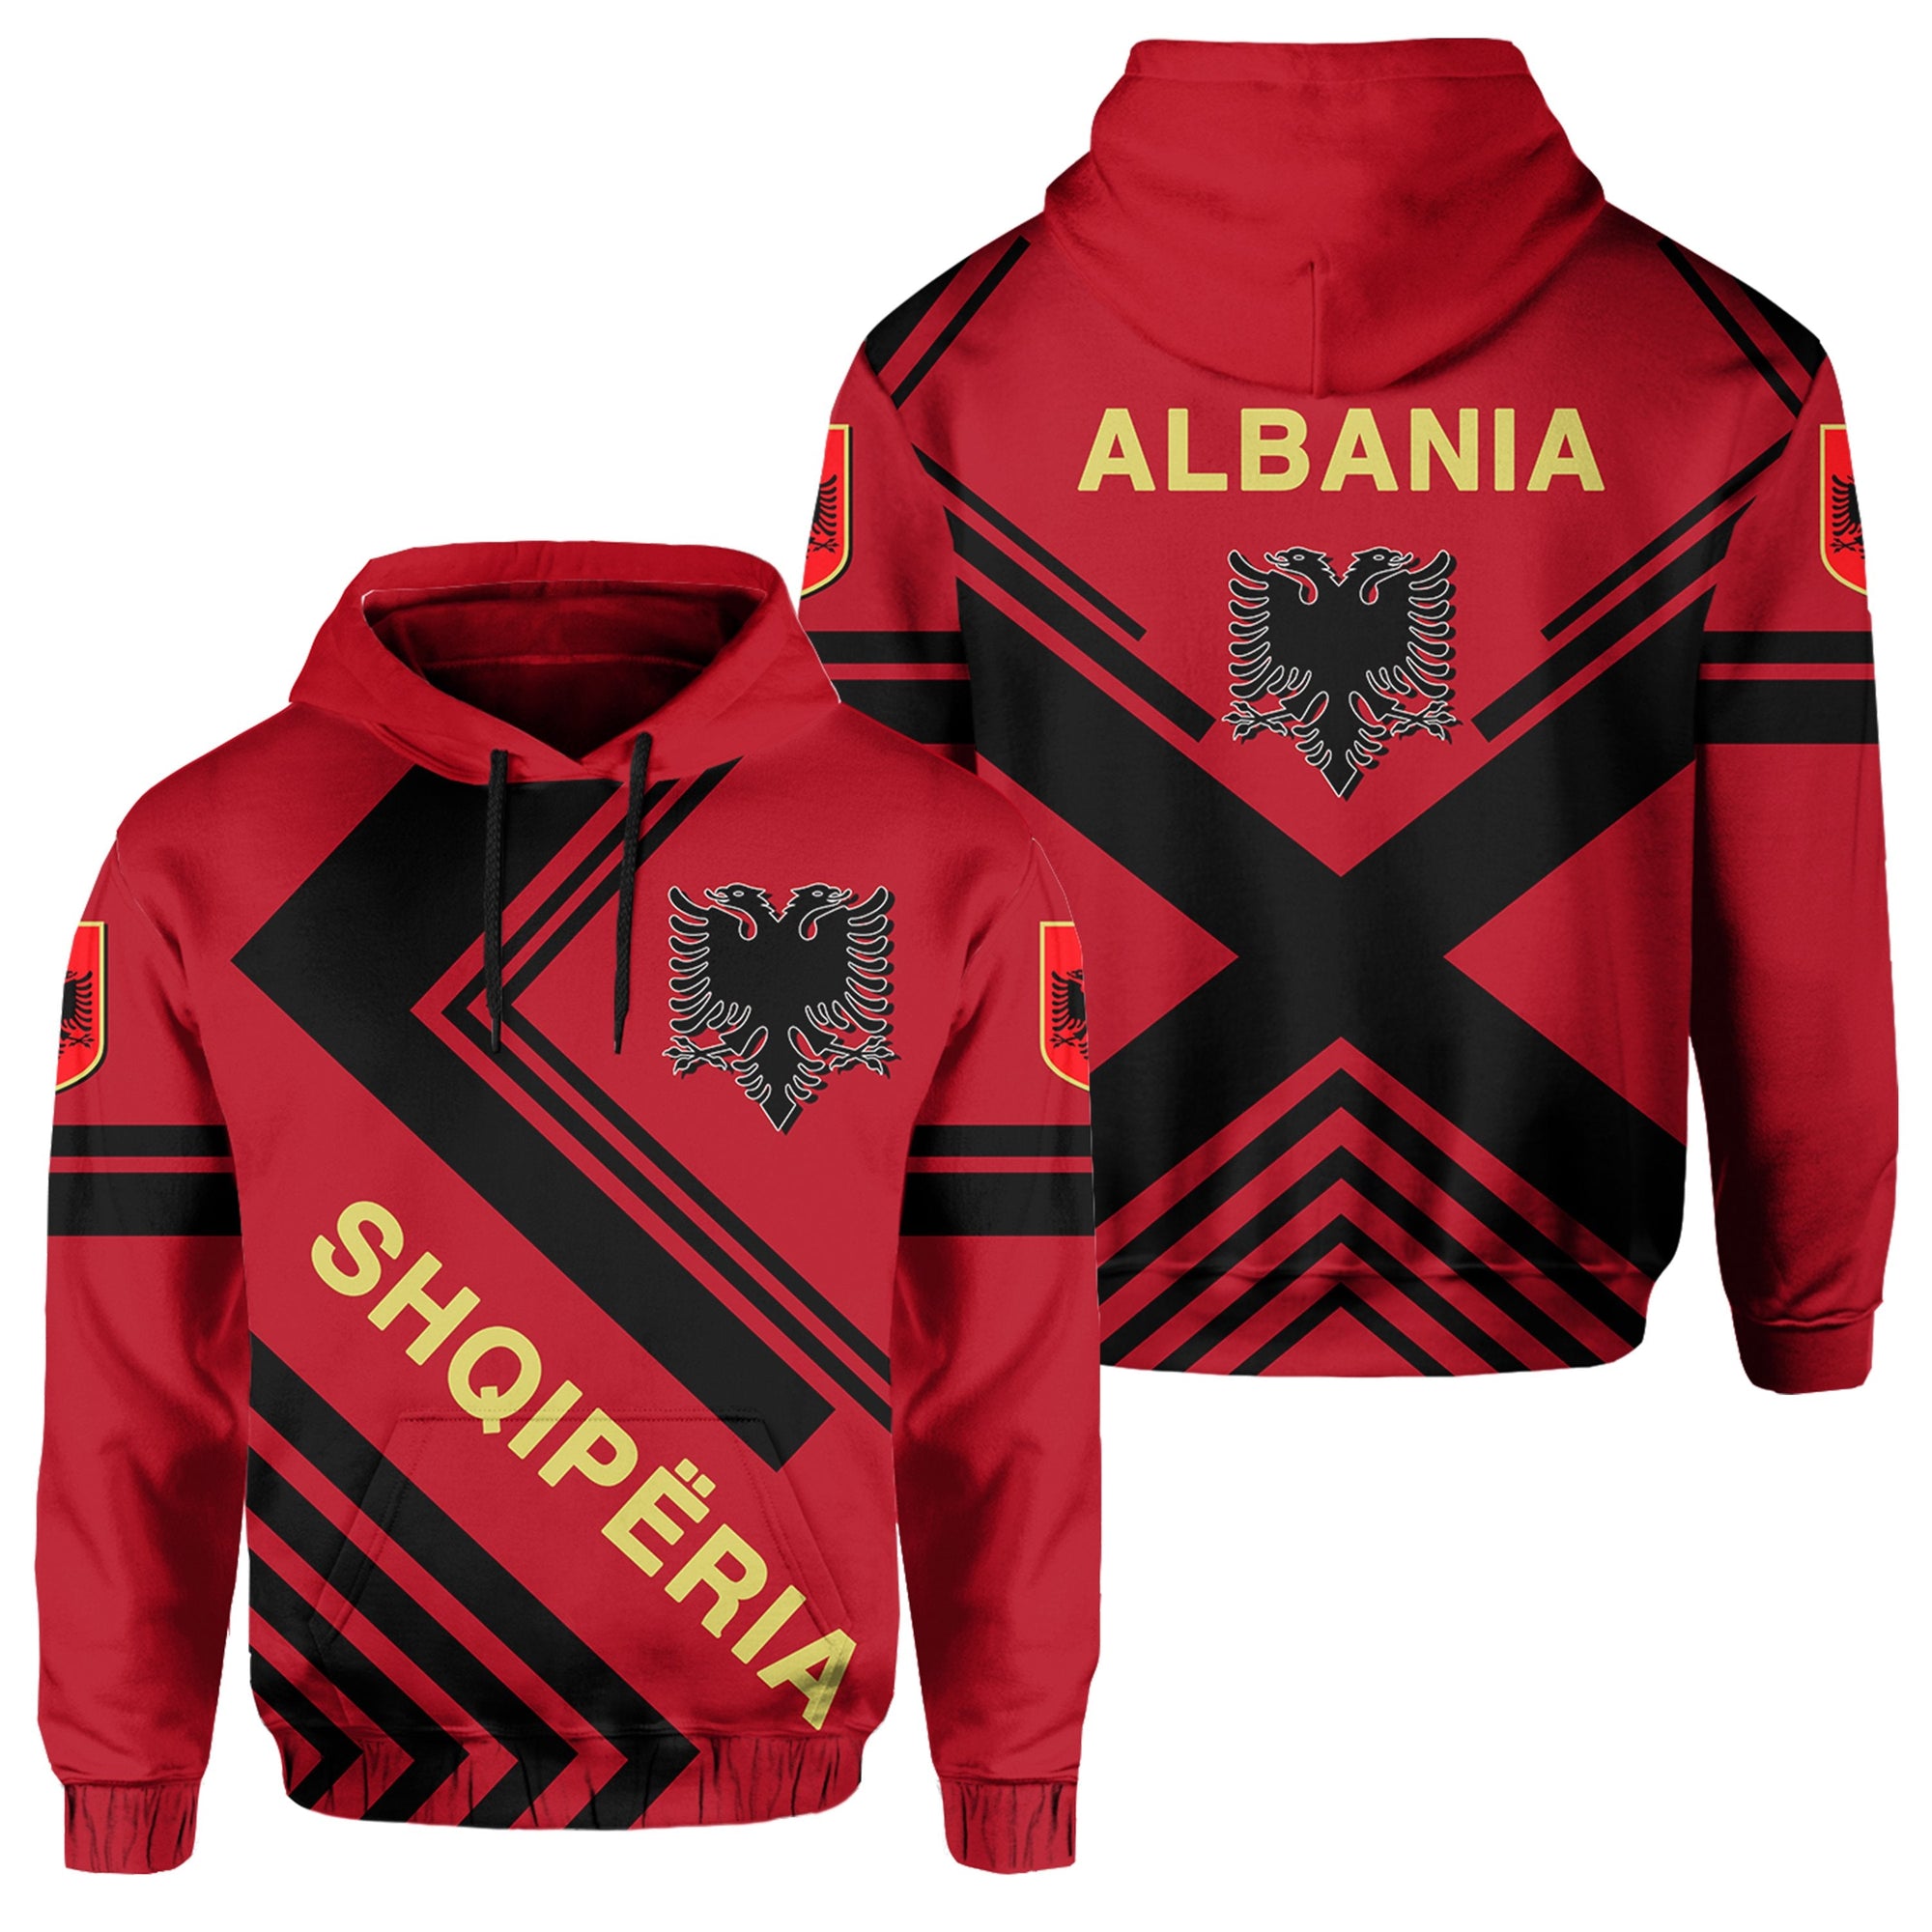 albania-hoodie-flag-european-nations-style